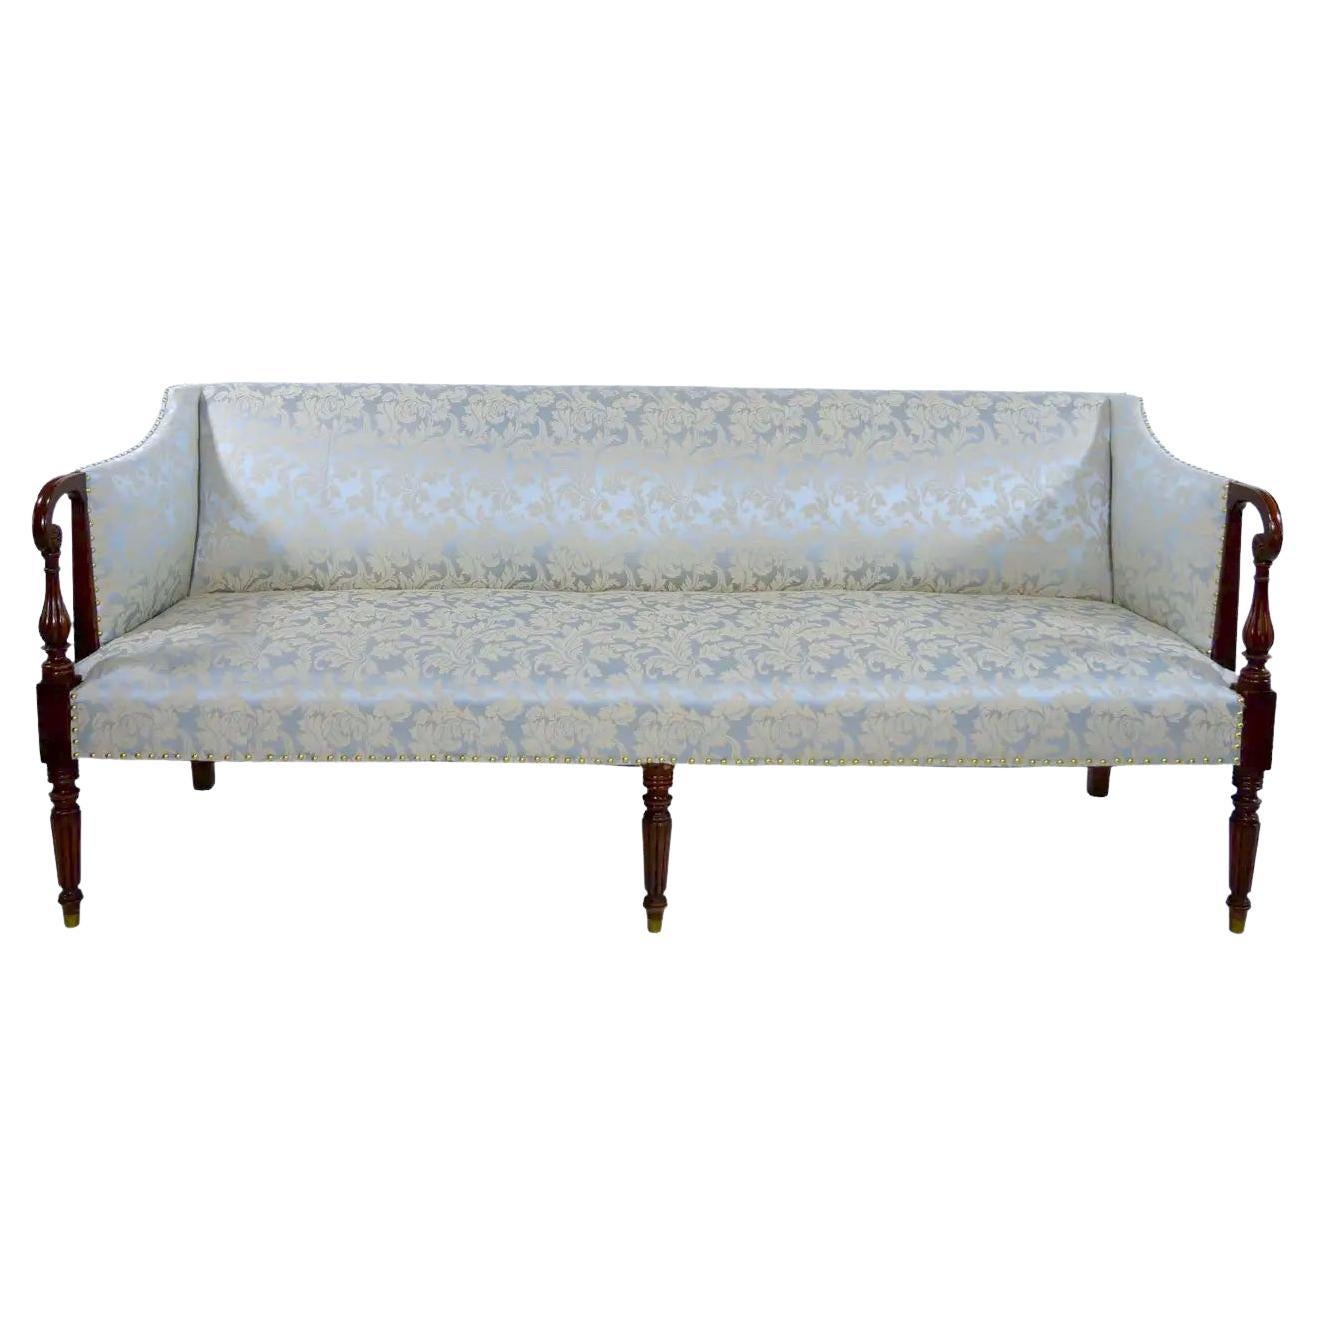 Sofa aus Mahagoniholz im Federal Sheraton-Stil des 19. Jahrhunderts